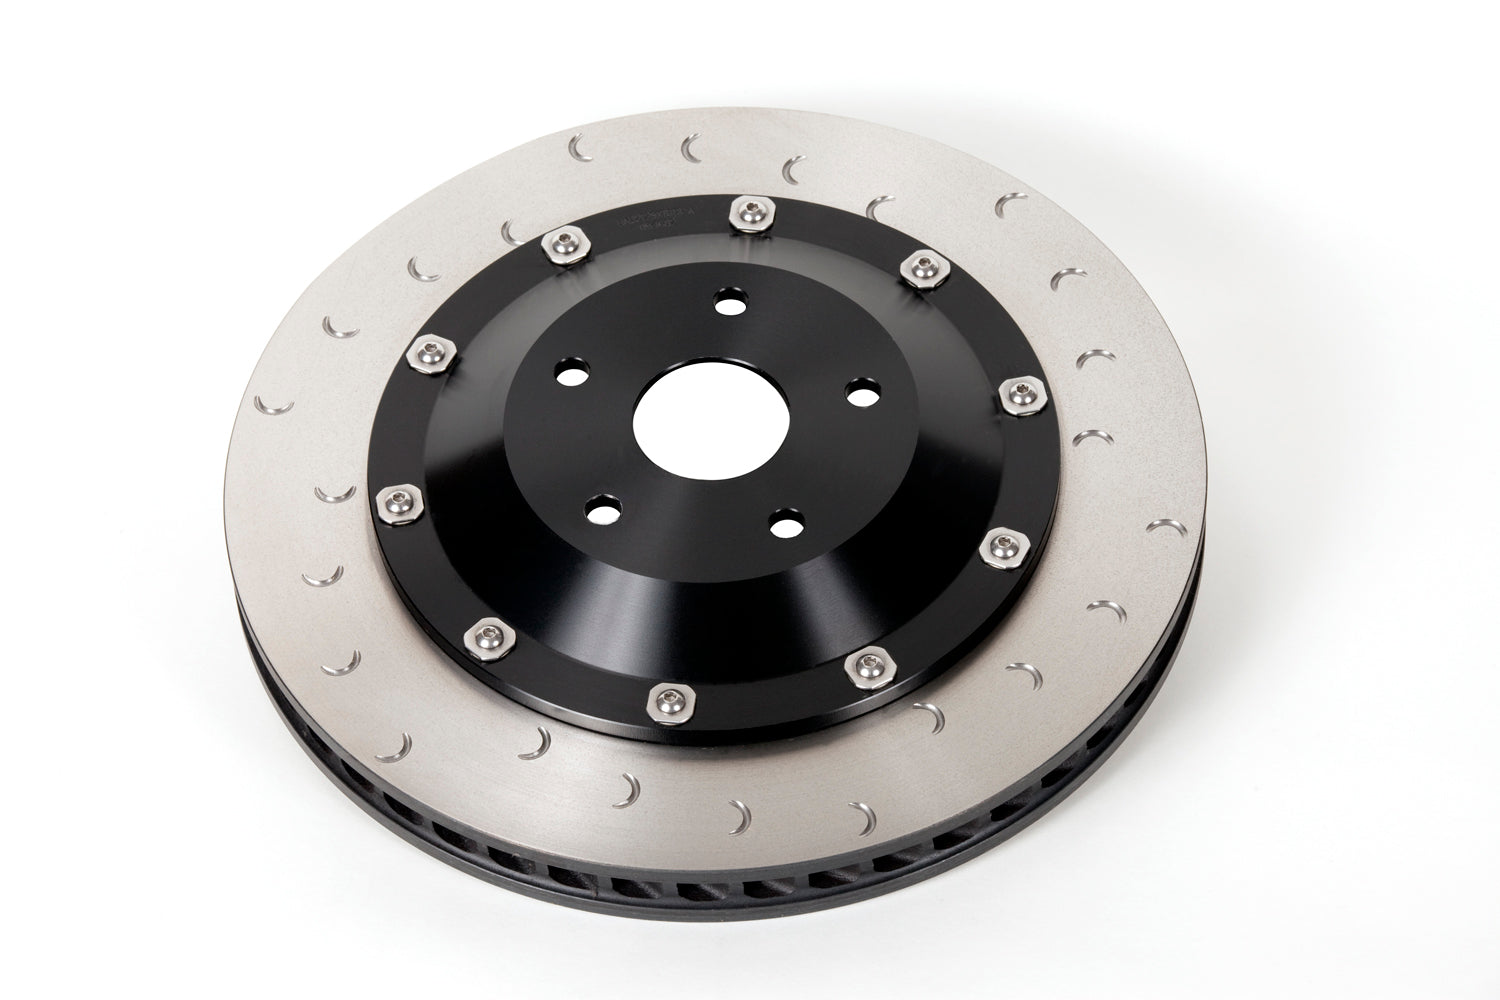 The myth of warped brake discs